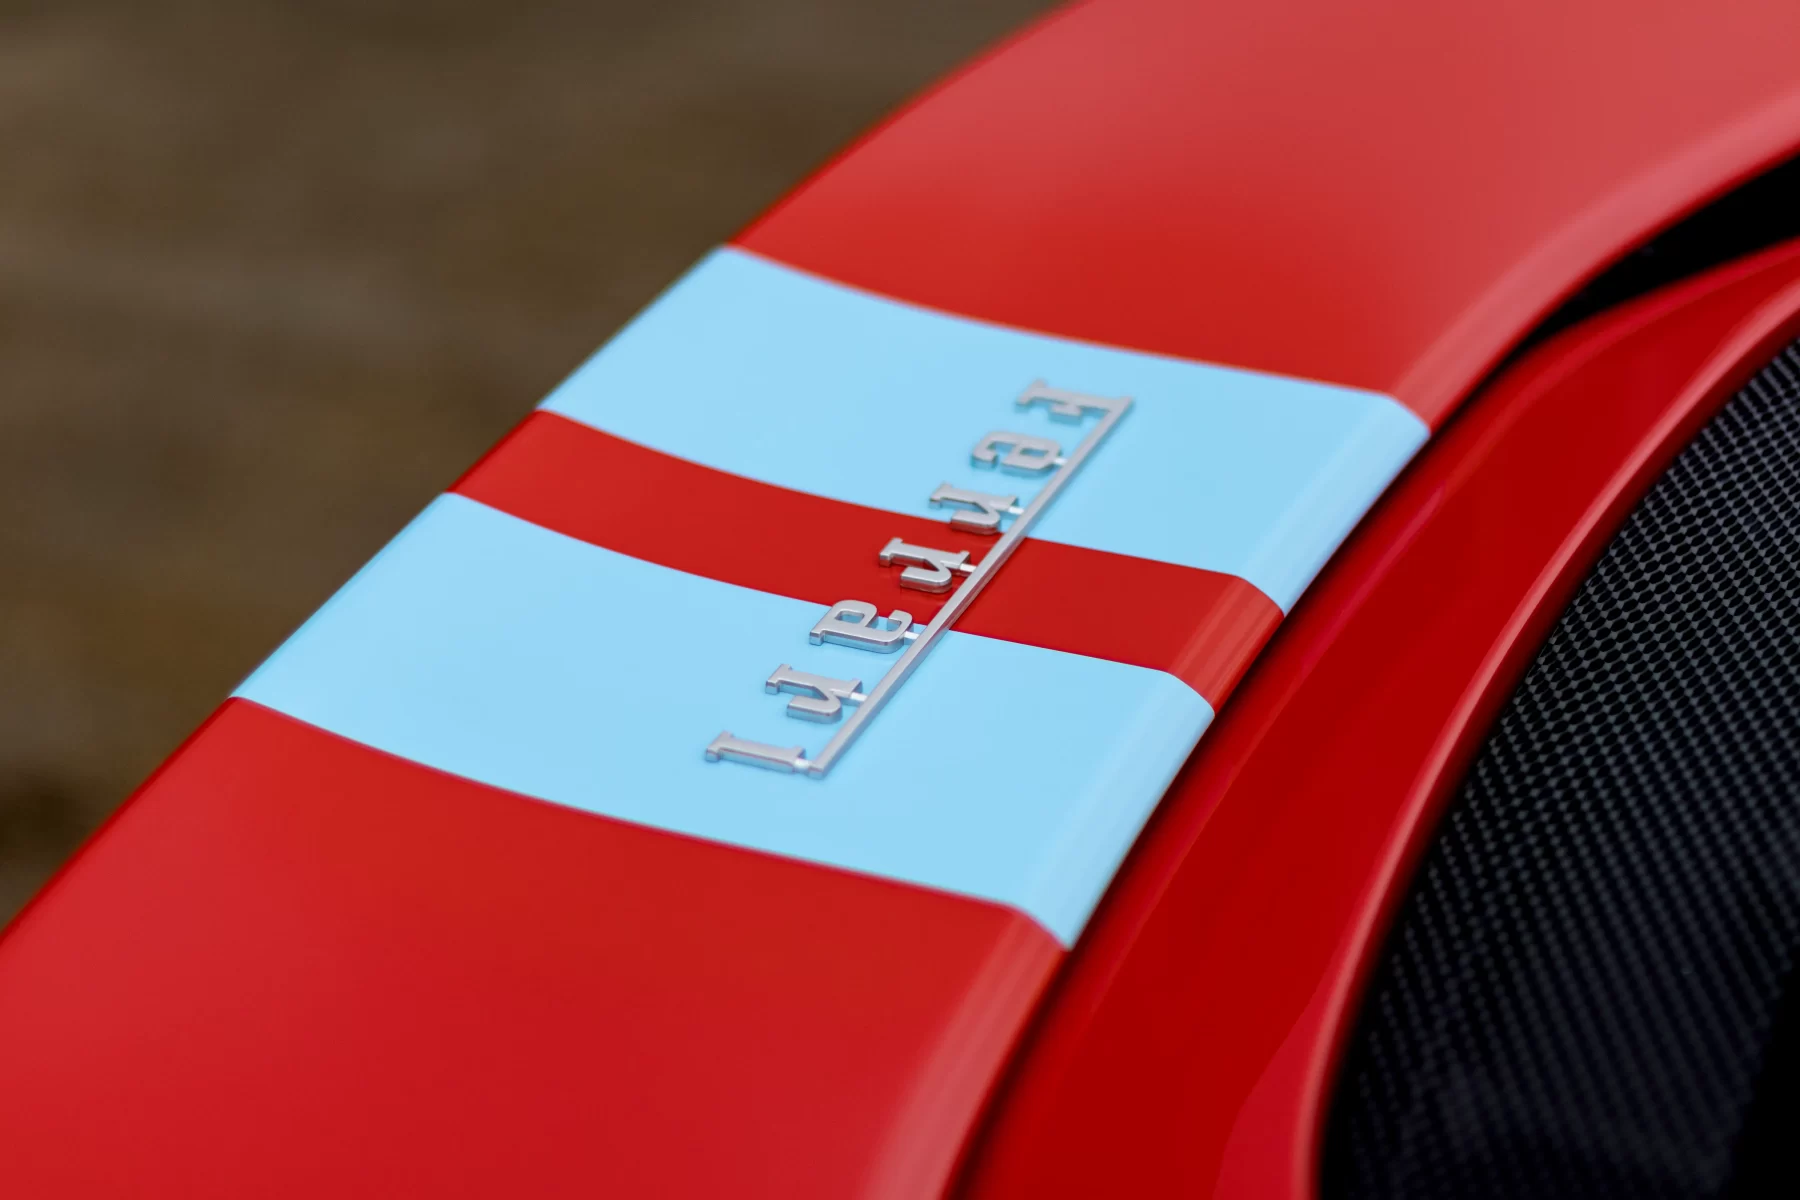 Ferrari 296 GTB Detailing and PPF 10 website - Reforma UK